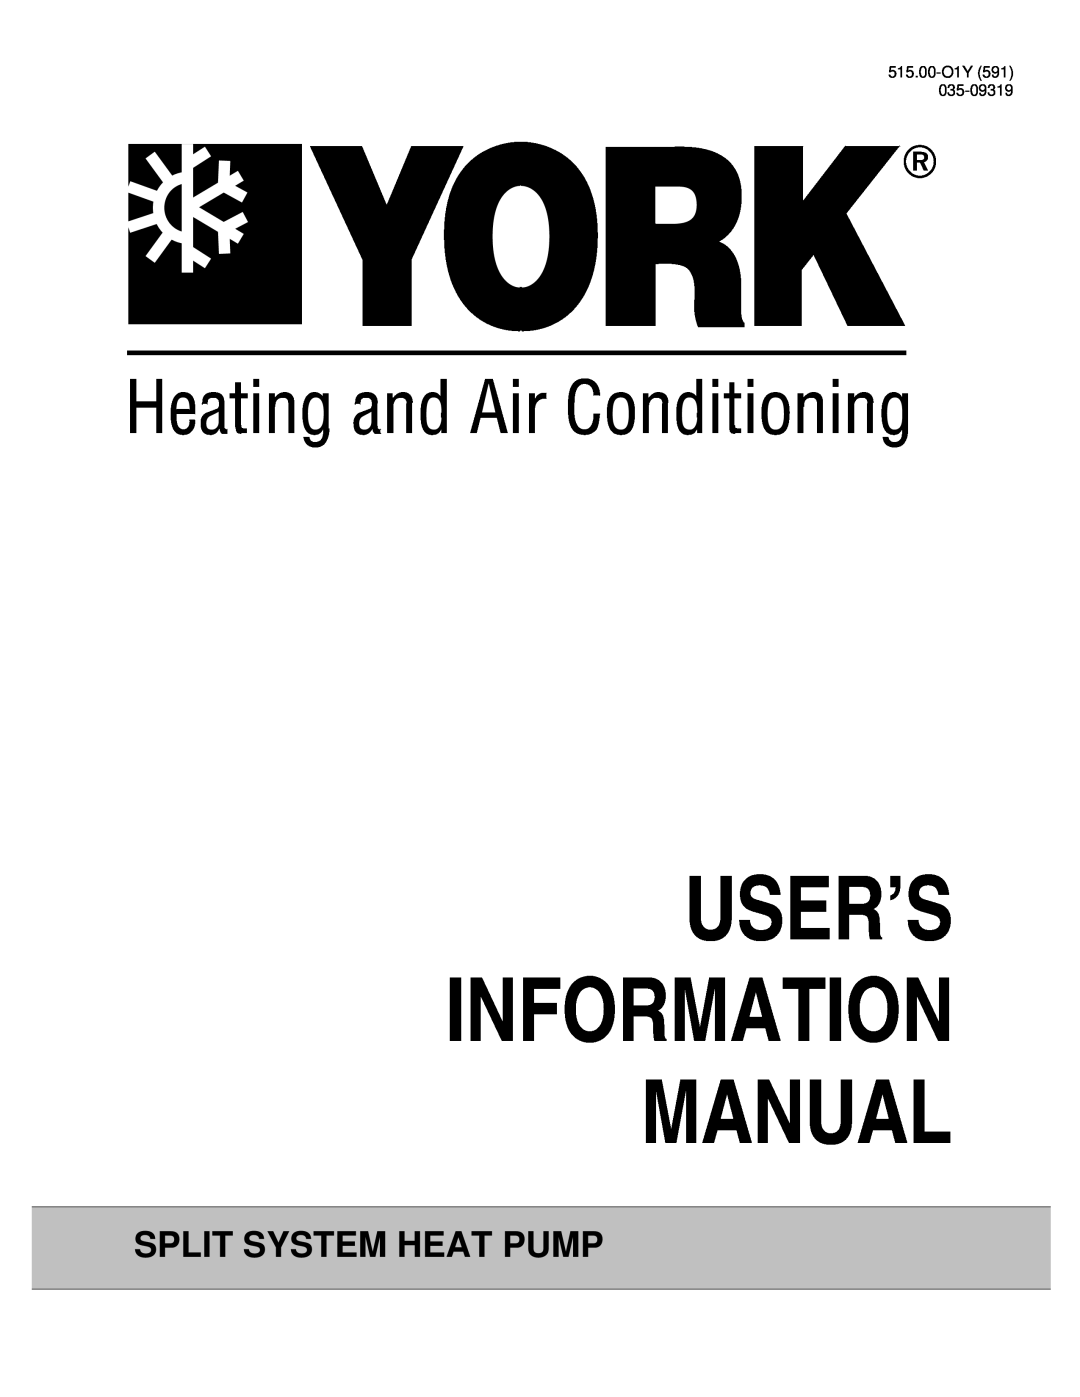 York 035-09319 manual User’S Information Manual, Split System Heat Pump 